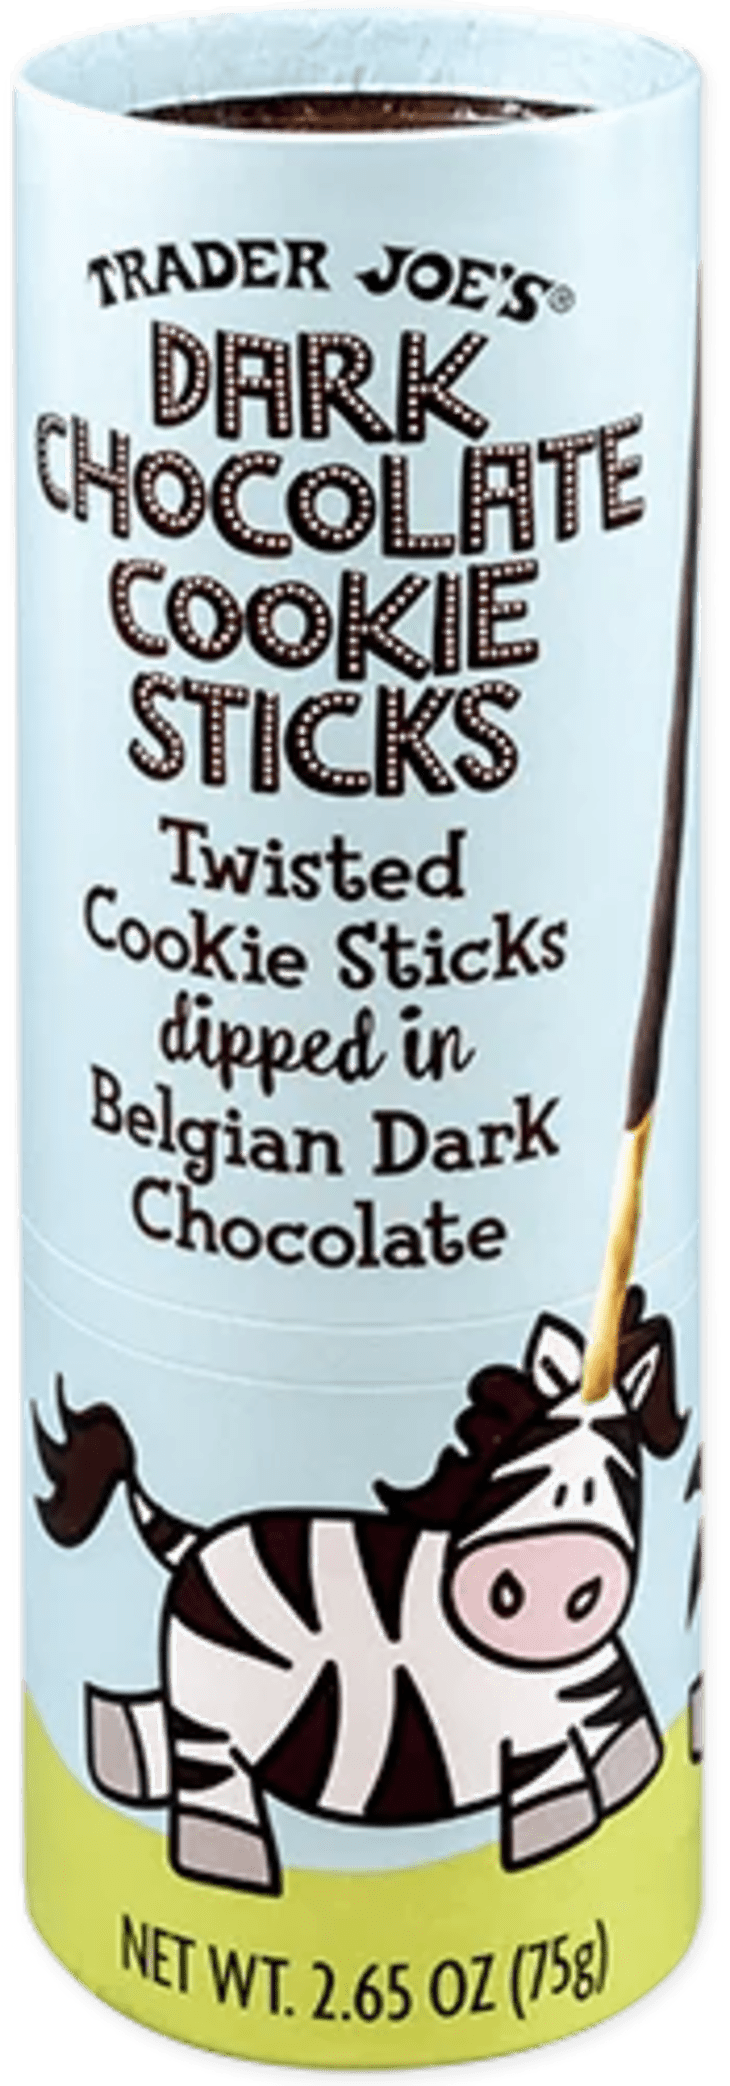 Dark Chocolate Cookie Sticks at Trader Joe's